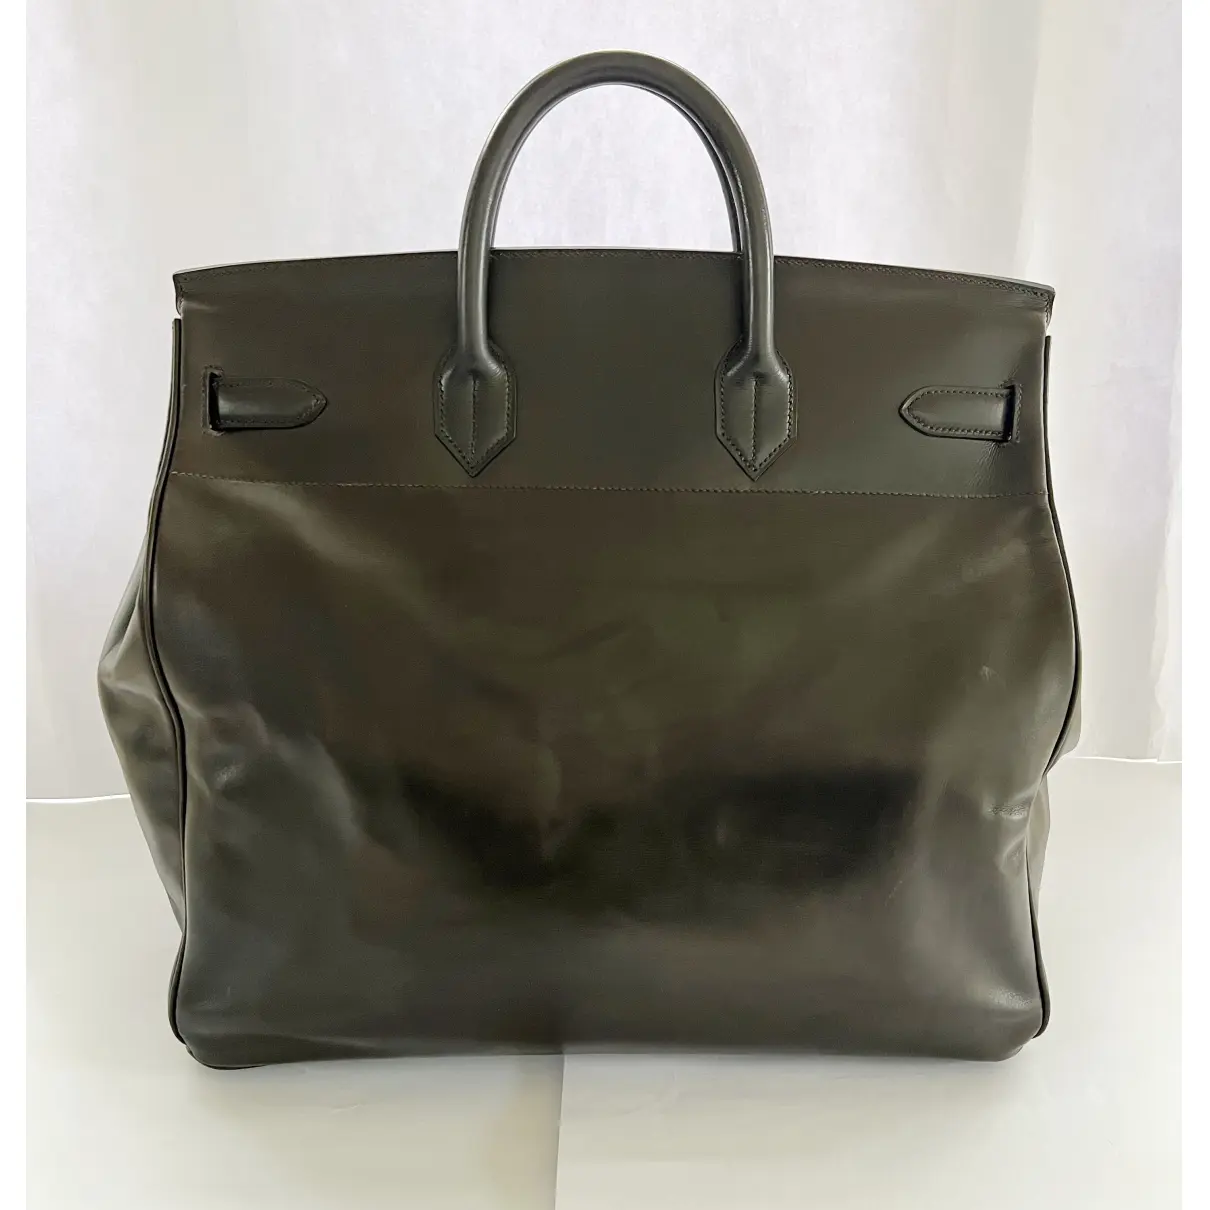 Buy Hermès Birkin 50 leather handbag online - Vintage